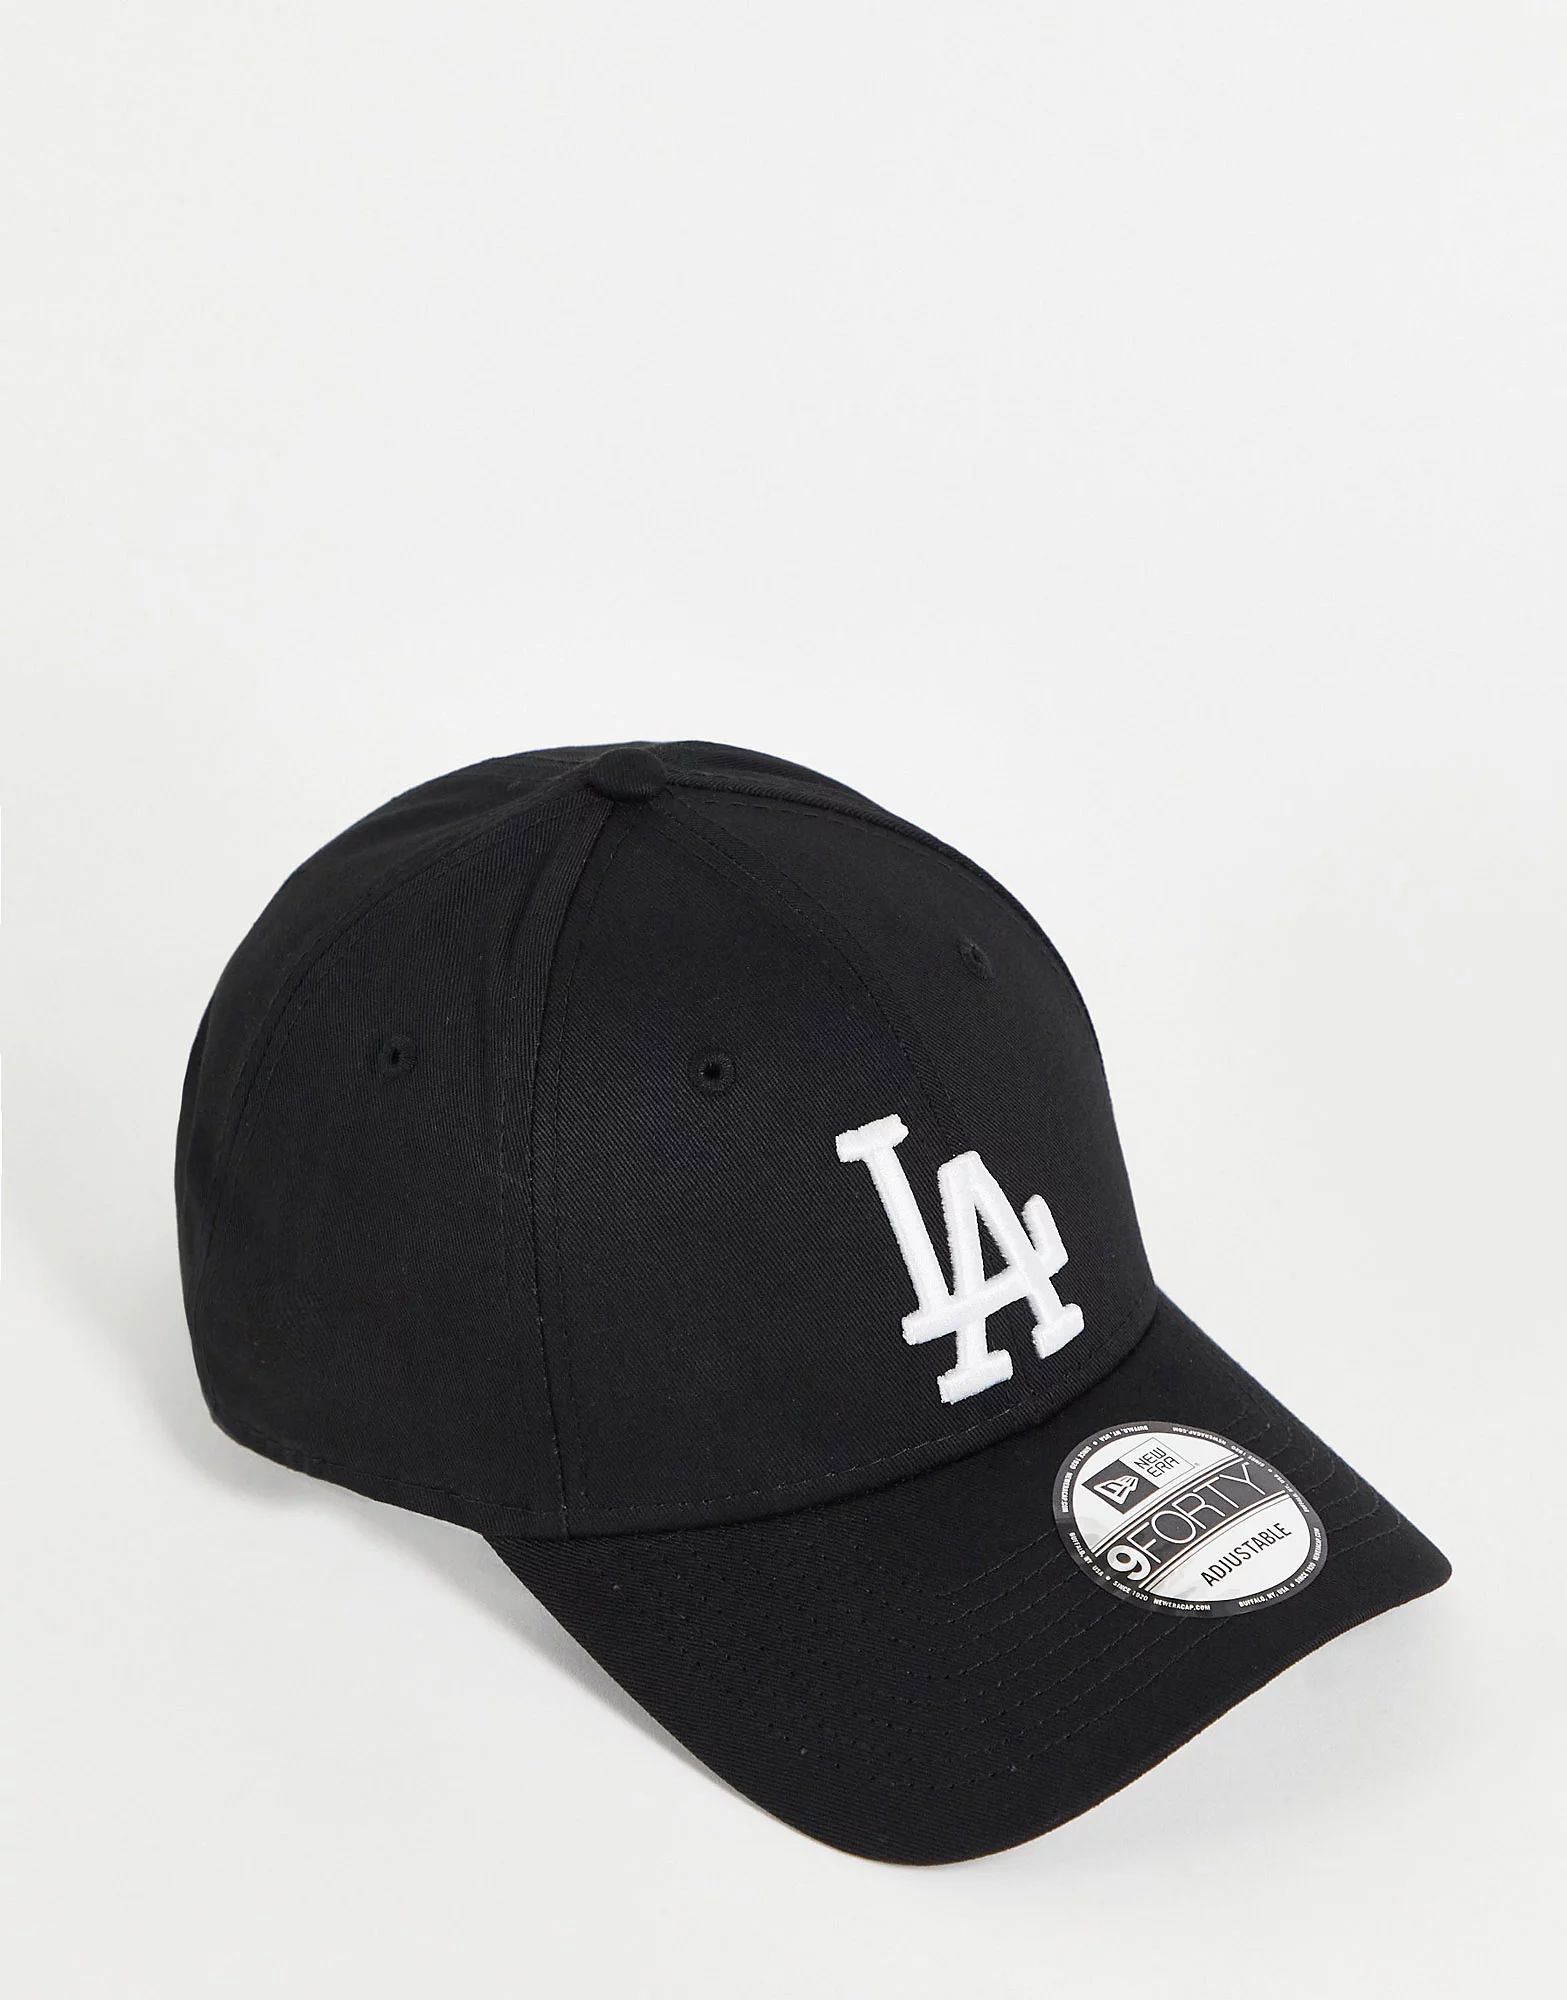 New Era 9Forty MLB LA Dodgers cap in black and white | ASOS | ASOS (Global)